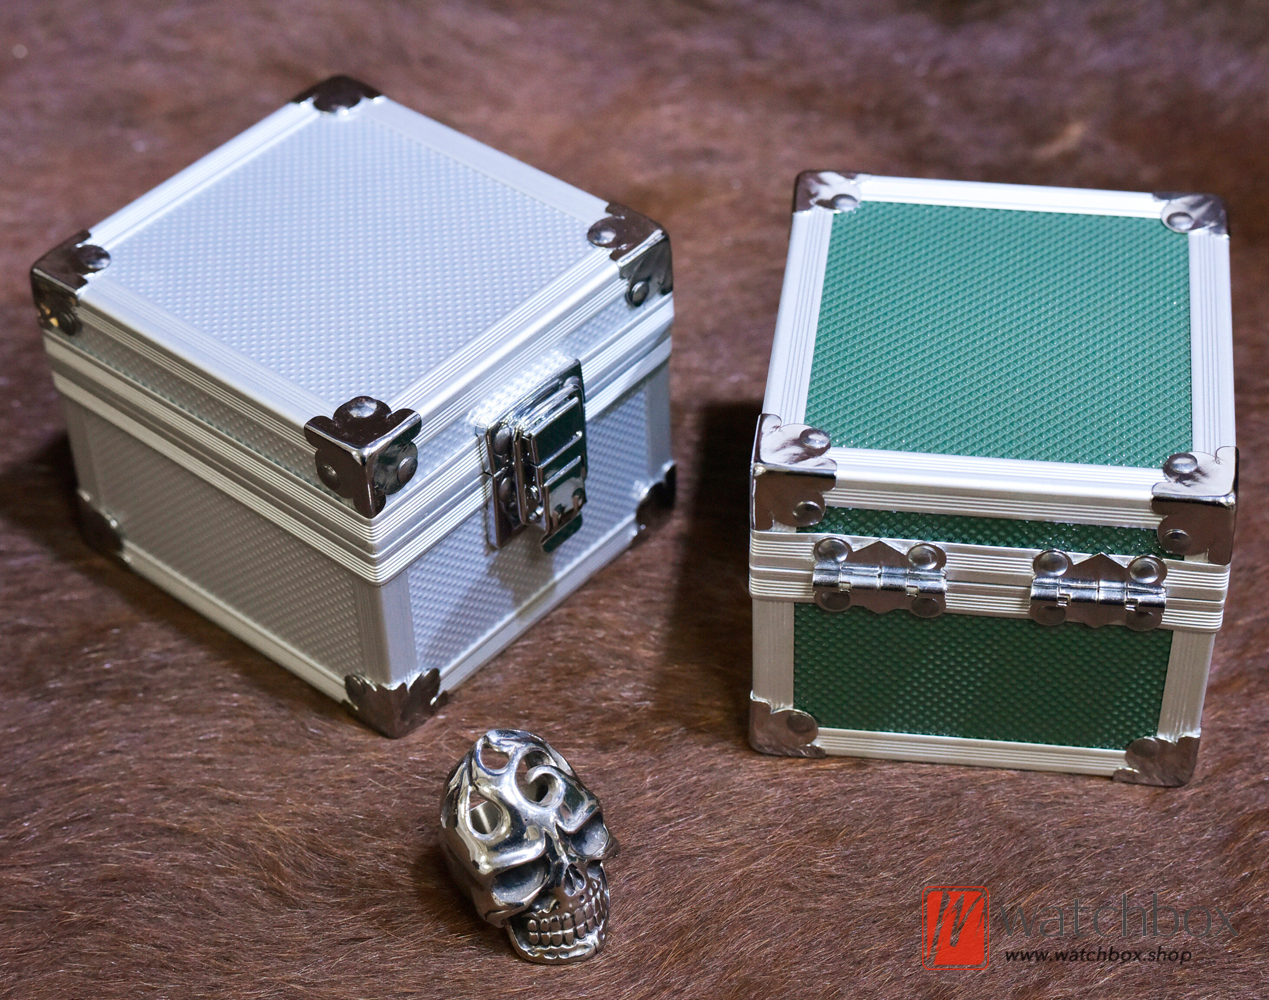 Portable Single Square Aluminum Alloy Watch Case Jewelry Storage Travel Box